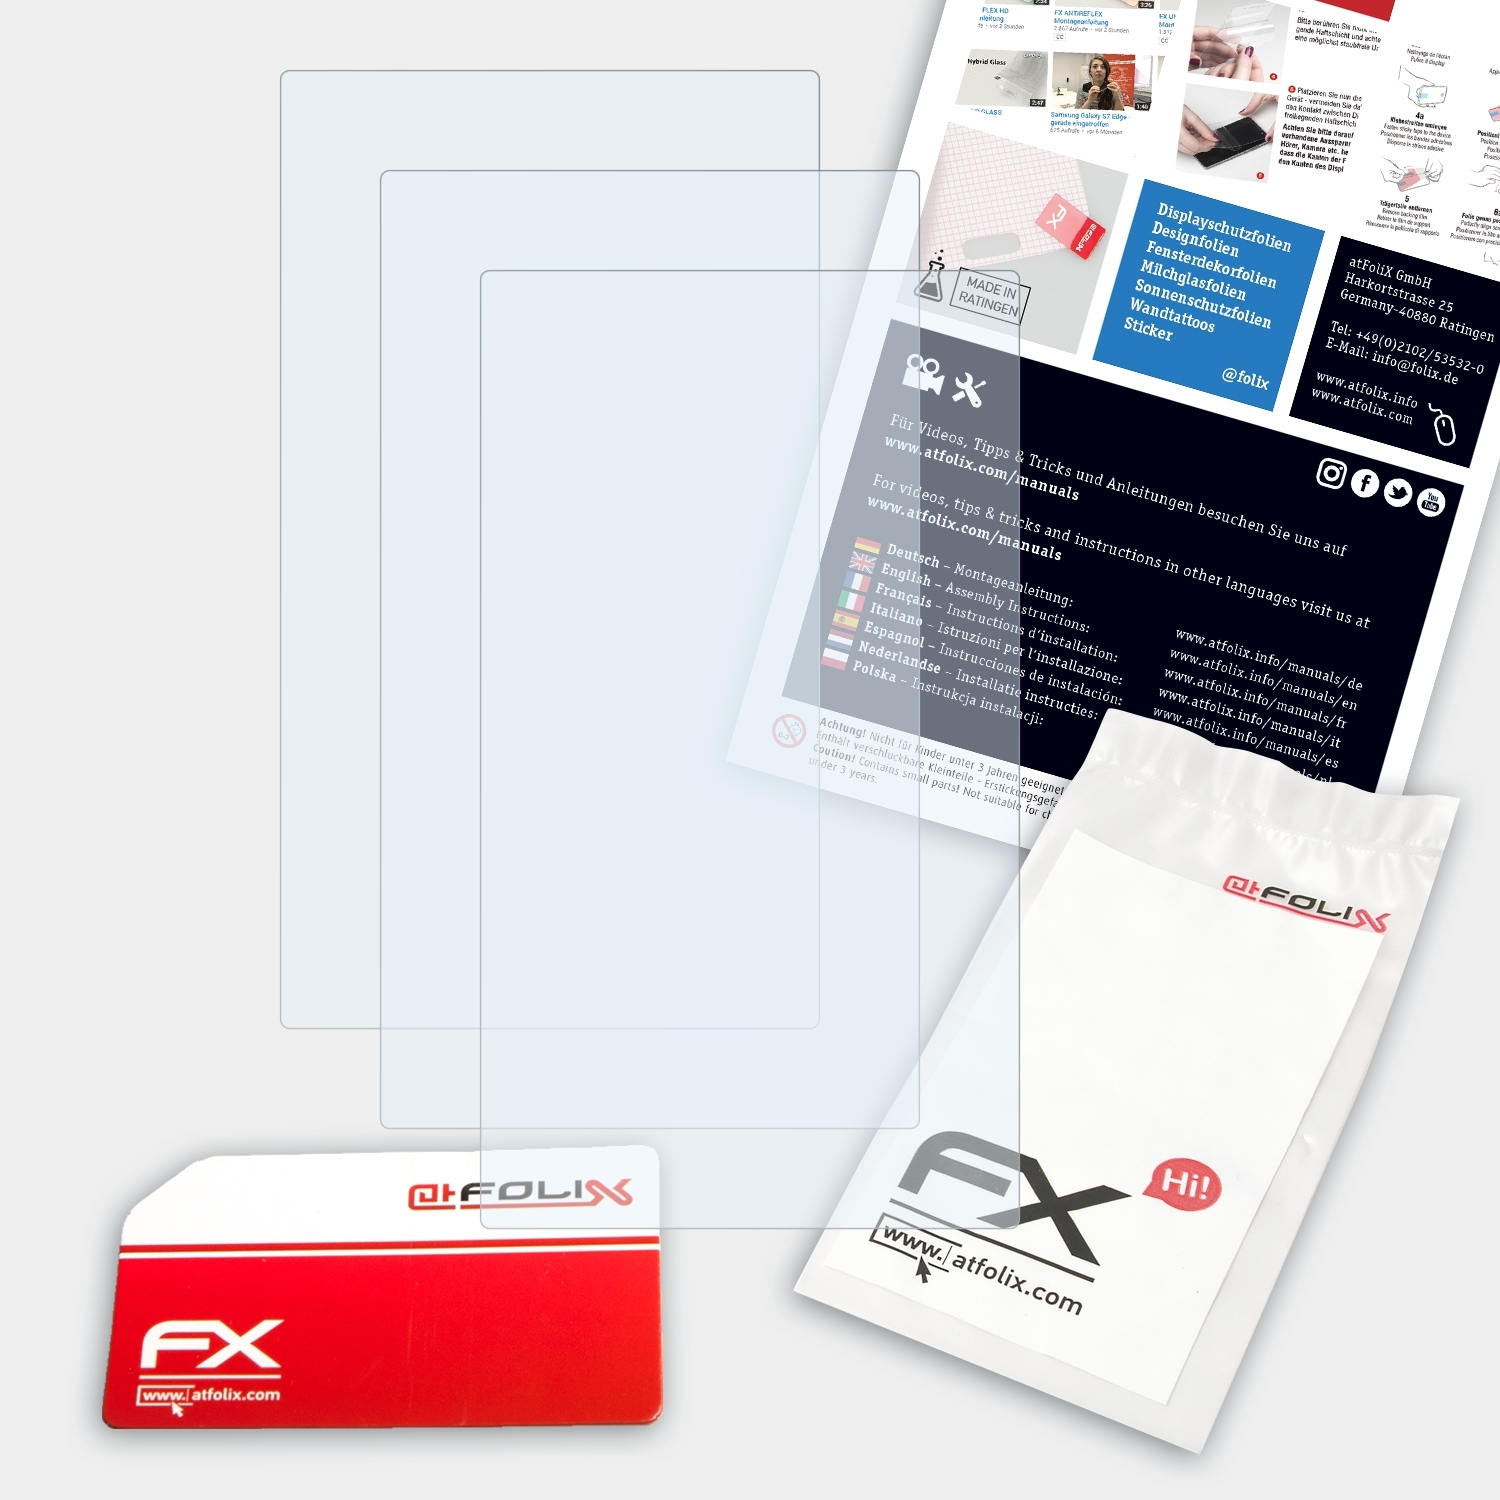 ATFOLIX 3x FX-Clear PA09YZ32) Displayschutz(für Panlelo